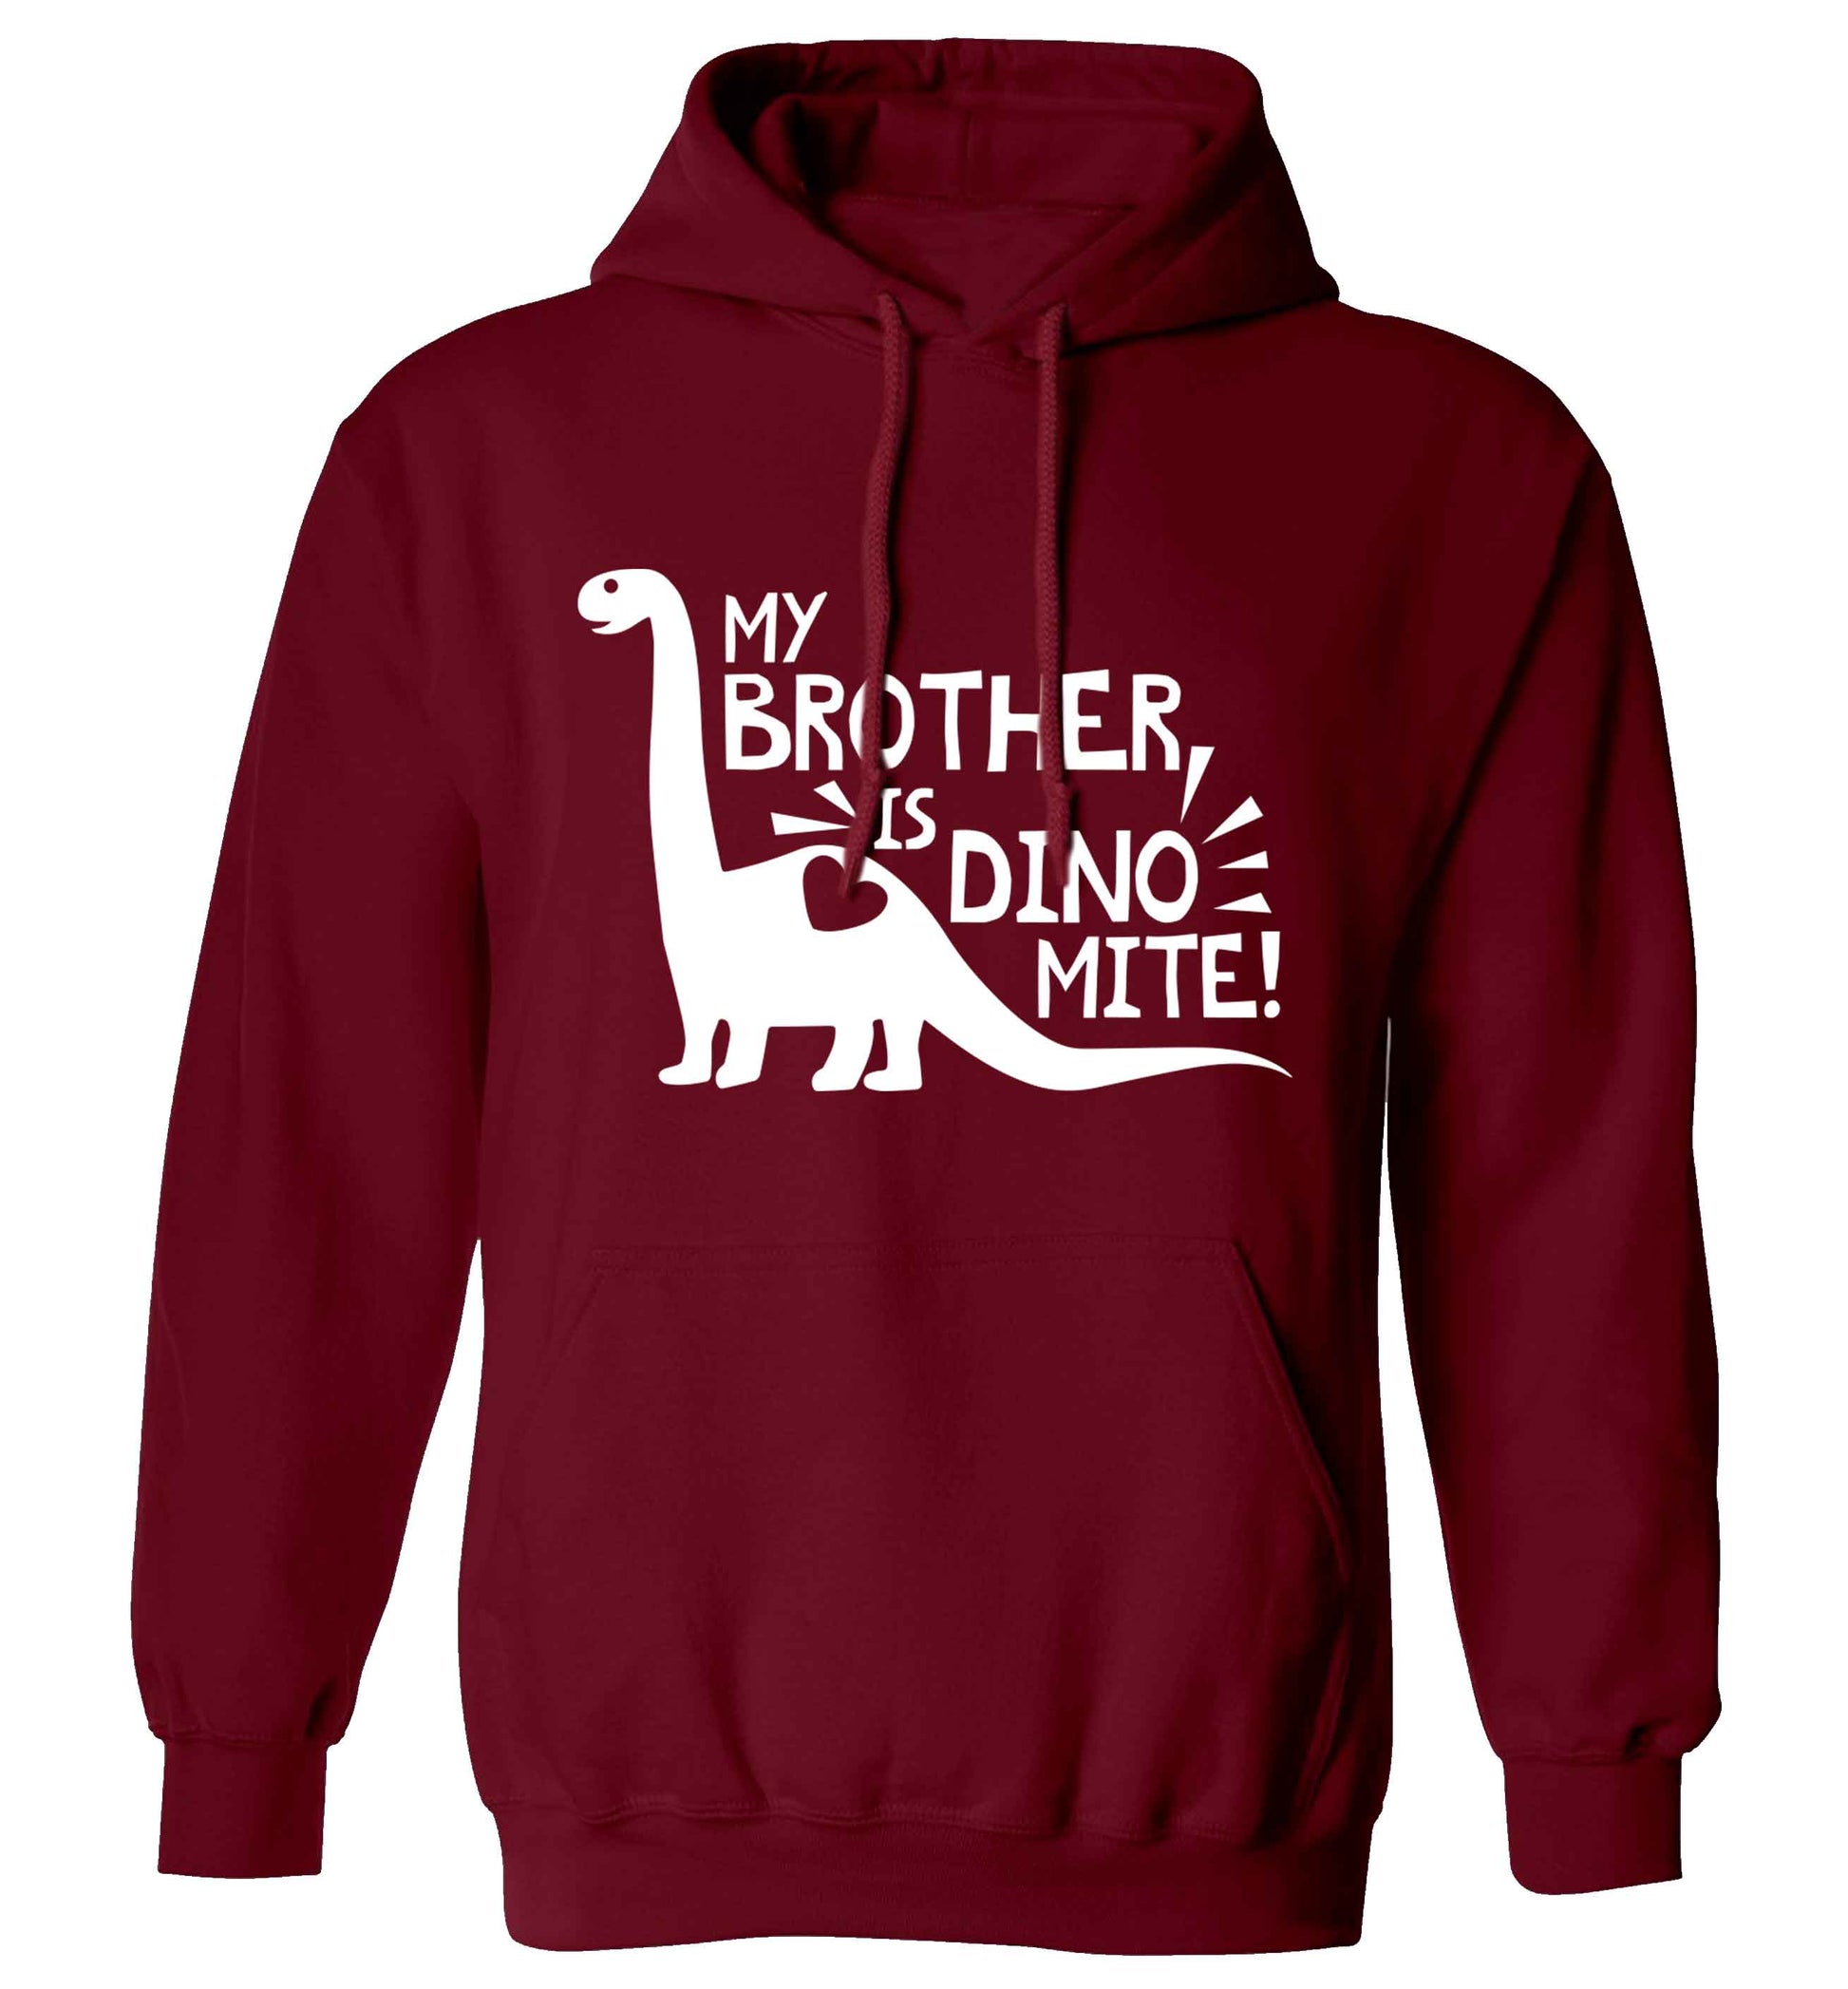 My brother is dinomite! adults unisex maroon hoodie 2XL